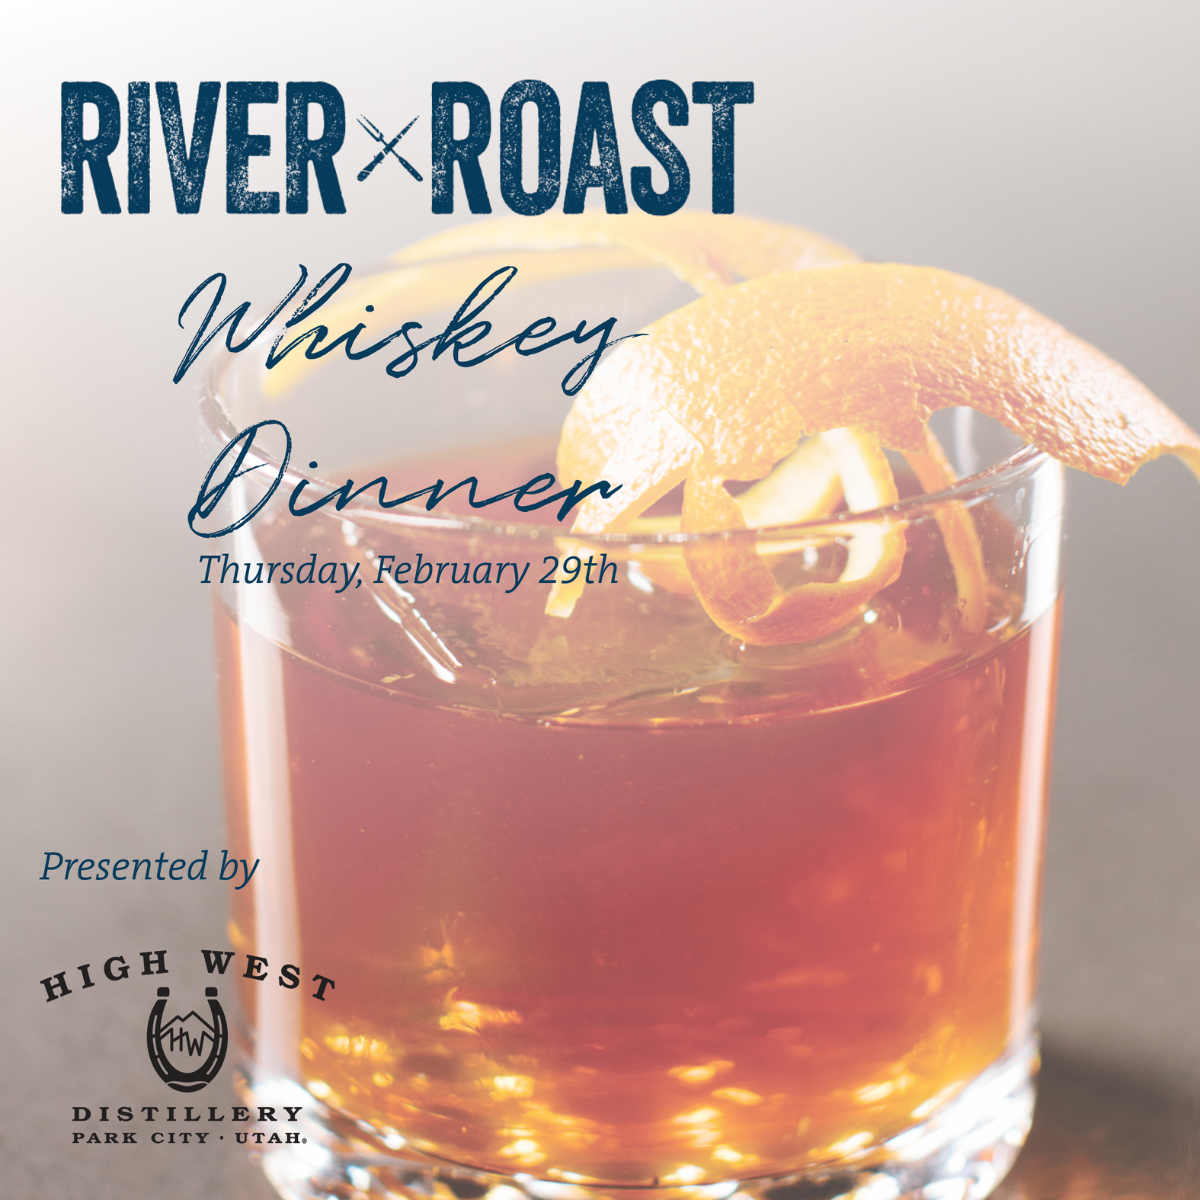 River Roast Whiskey Dinner Thursday, February 29th presented by High West Whiskey